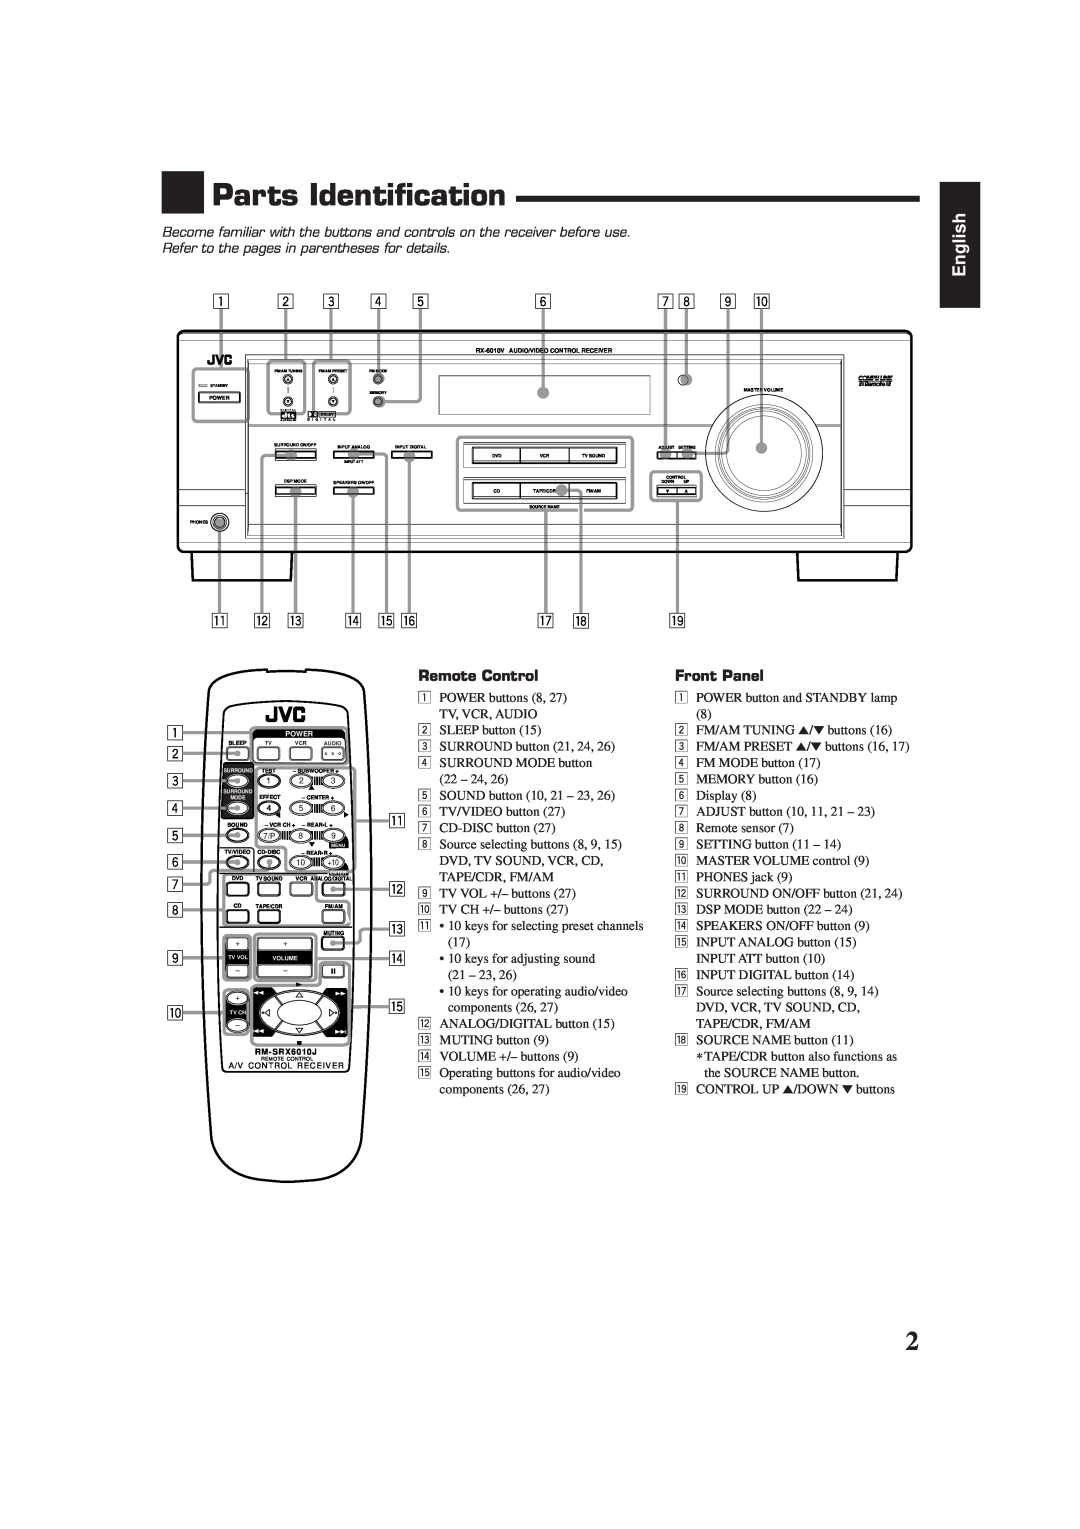 JVC RX-6010VBK manual Parts Identification, English, q w e r t y, 1 2 3 4 5 6 7 8 9 p, Remote Control, Front Panel 